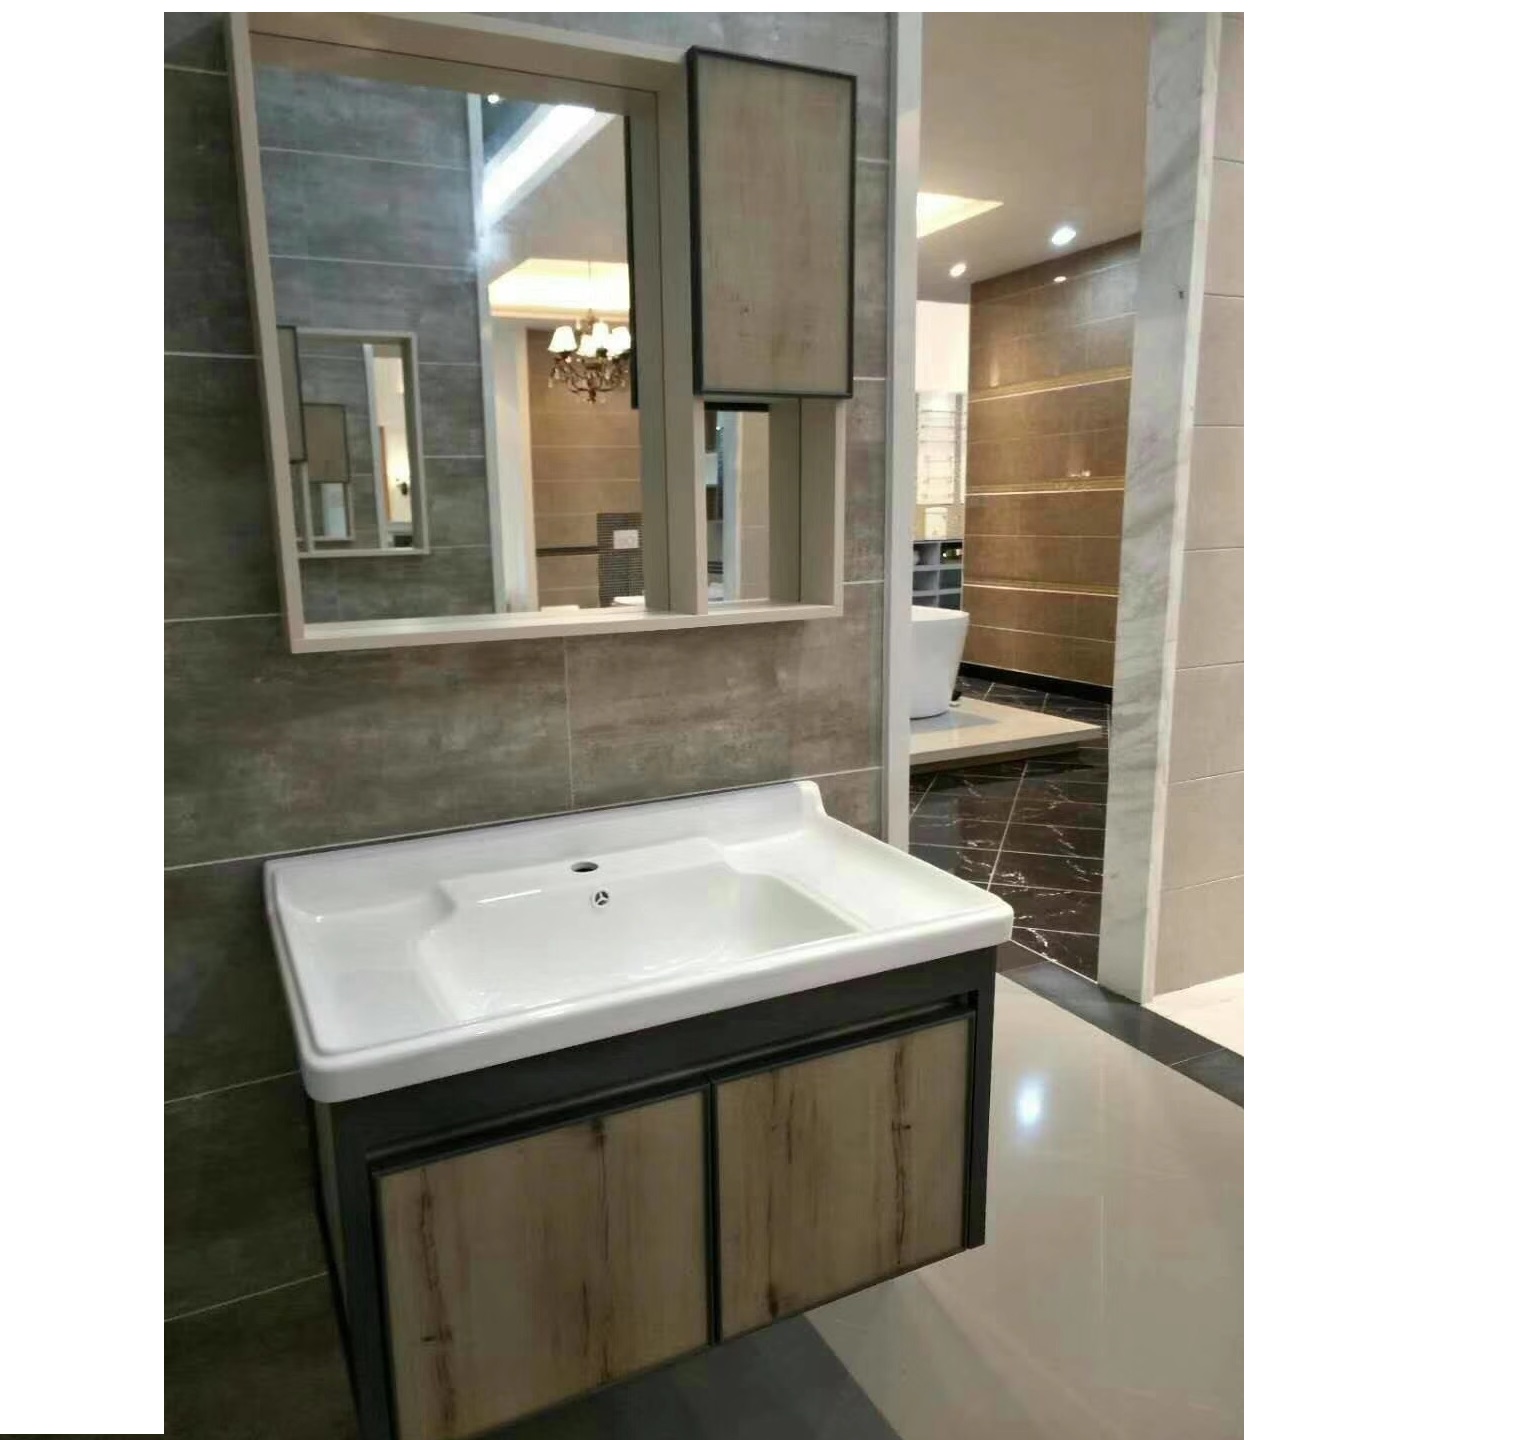 80cm bath lavatory basin cabinet with wood veneer surface